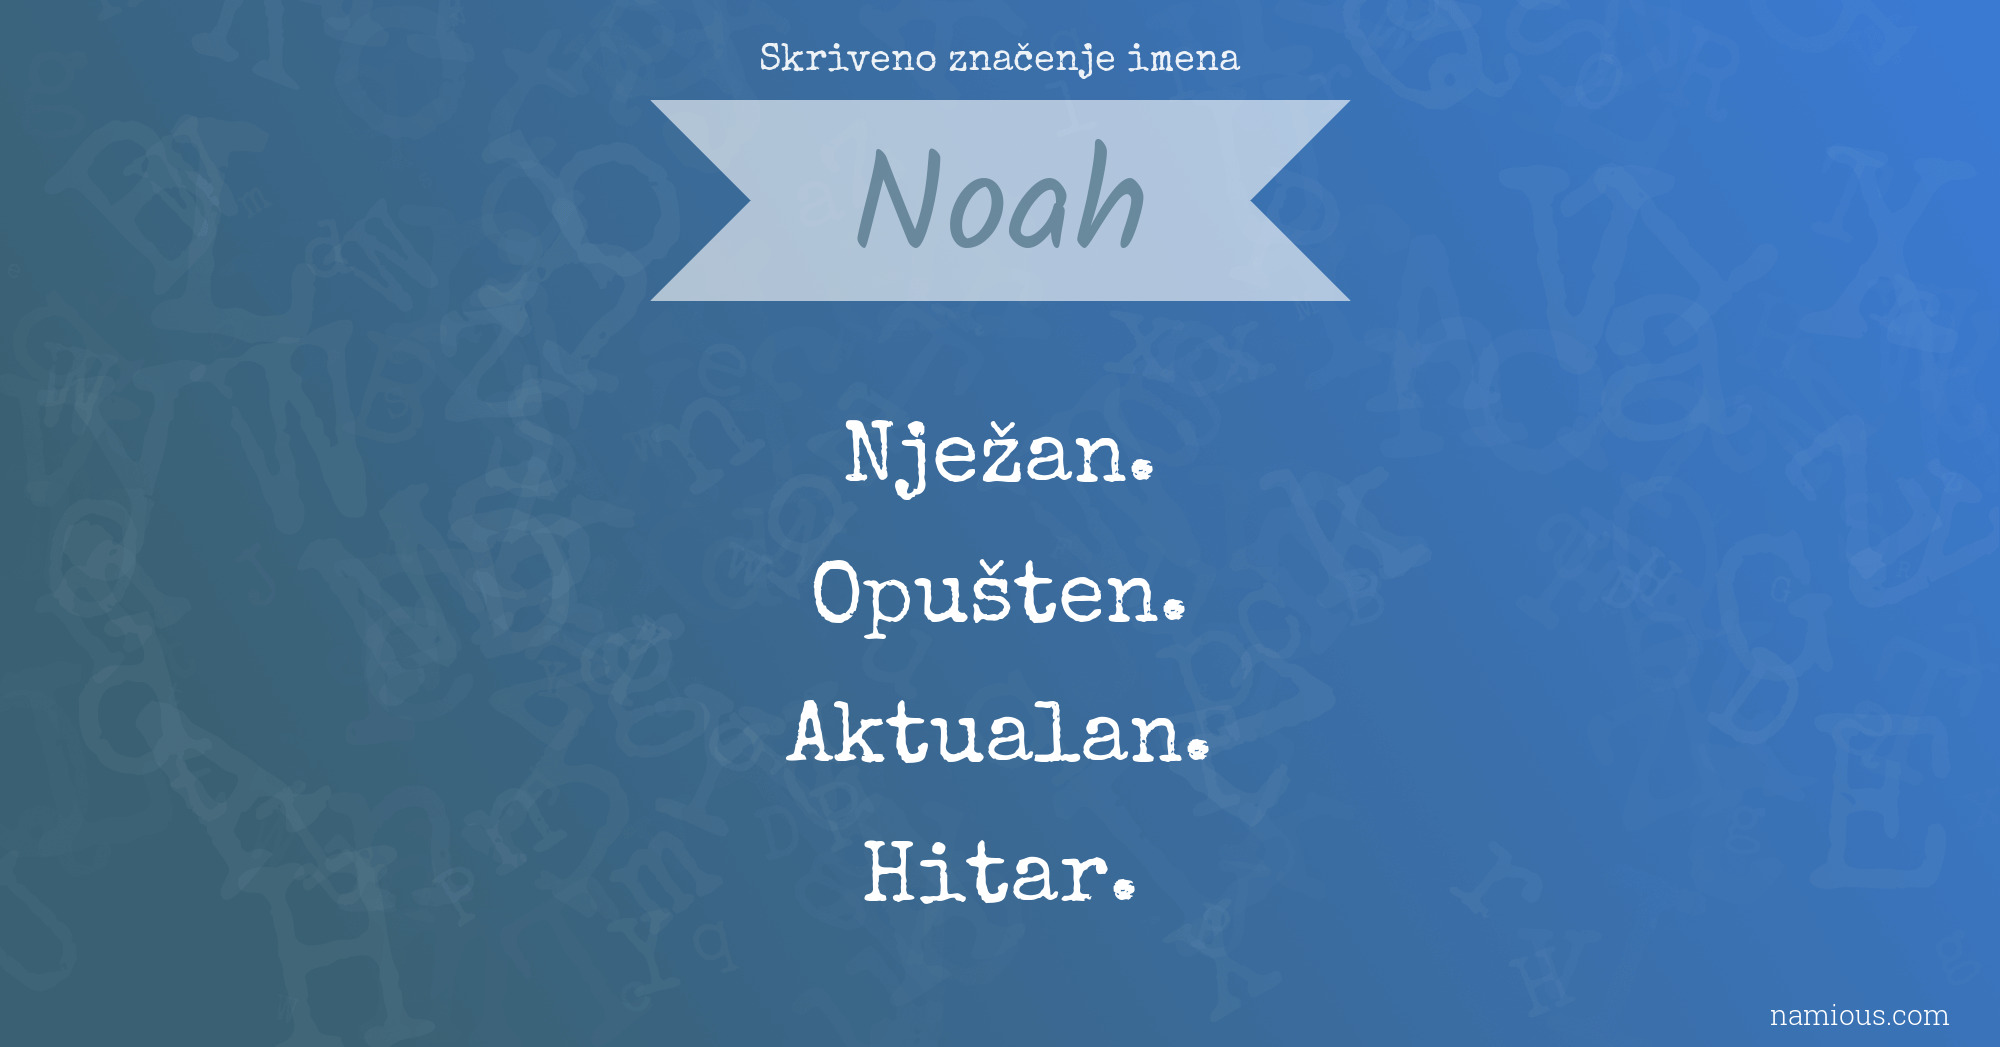 Skriveno značenje imena Noah